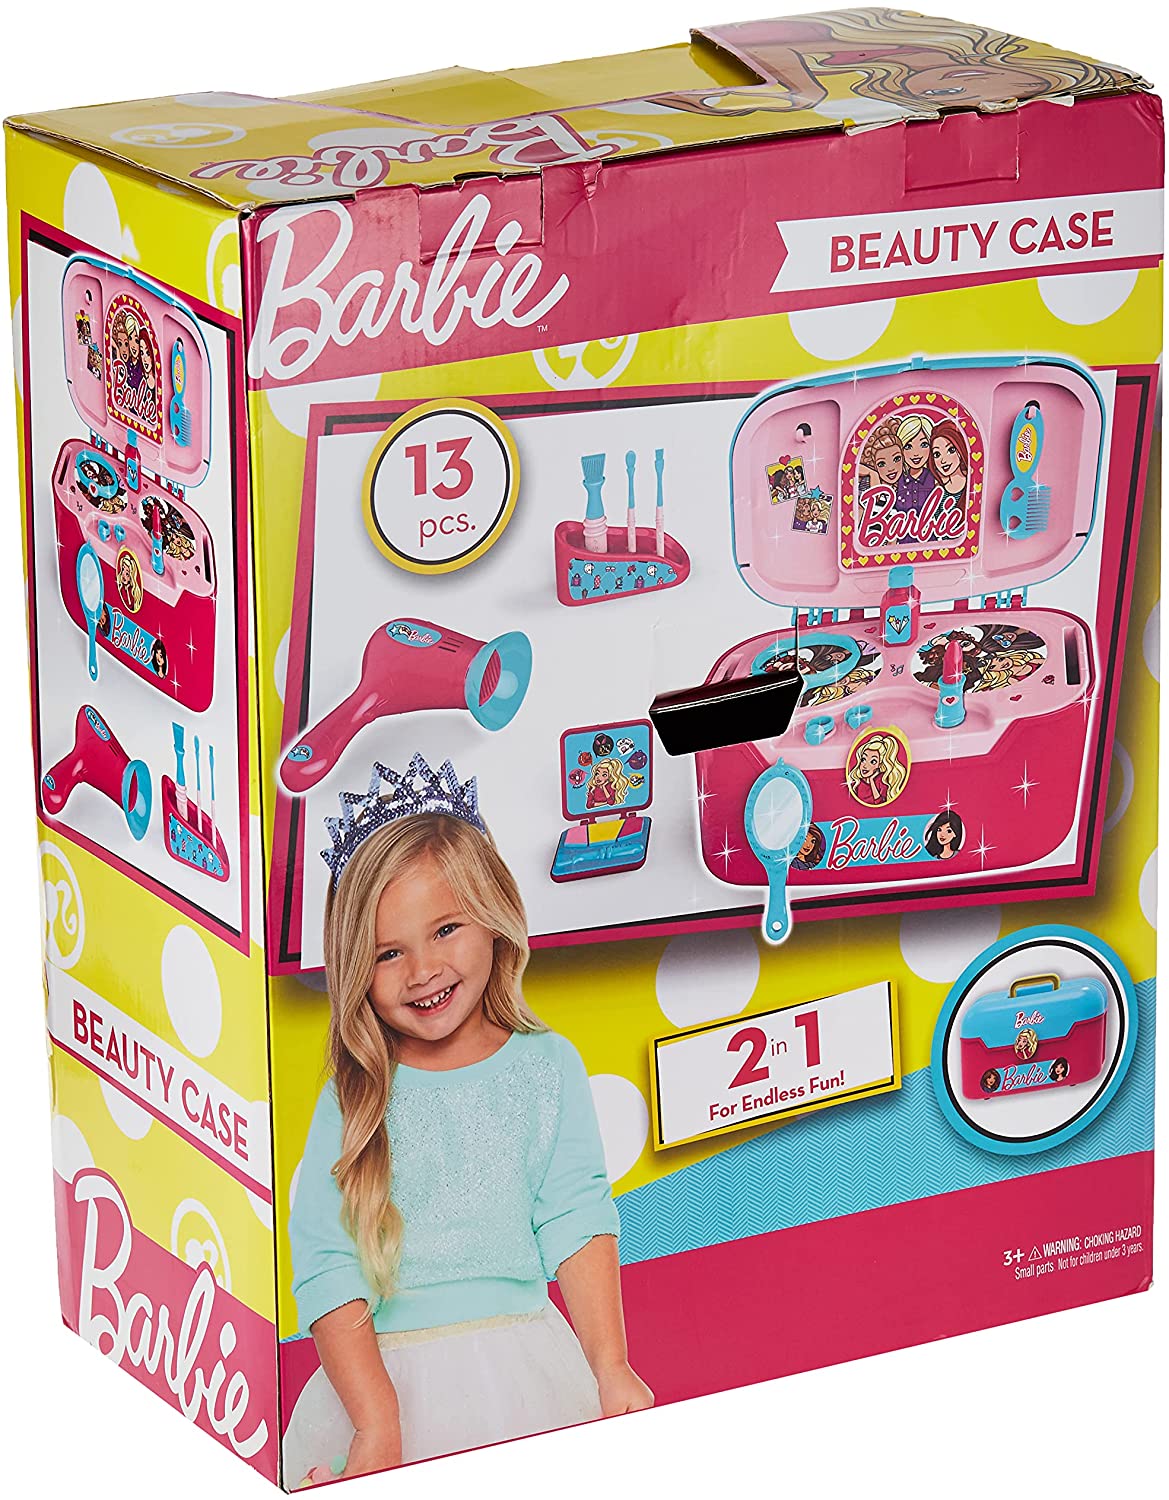 Portable Beauty Case